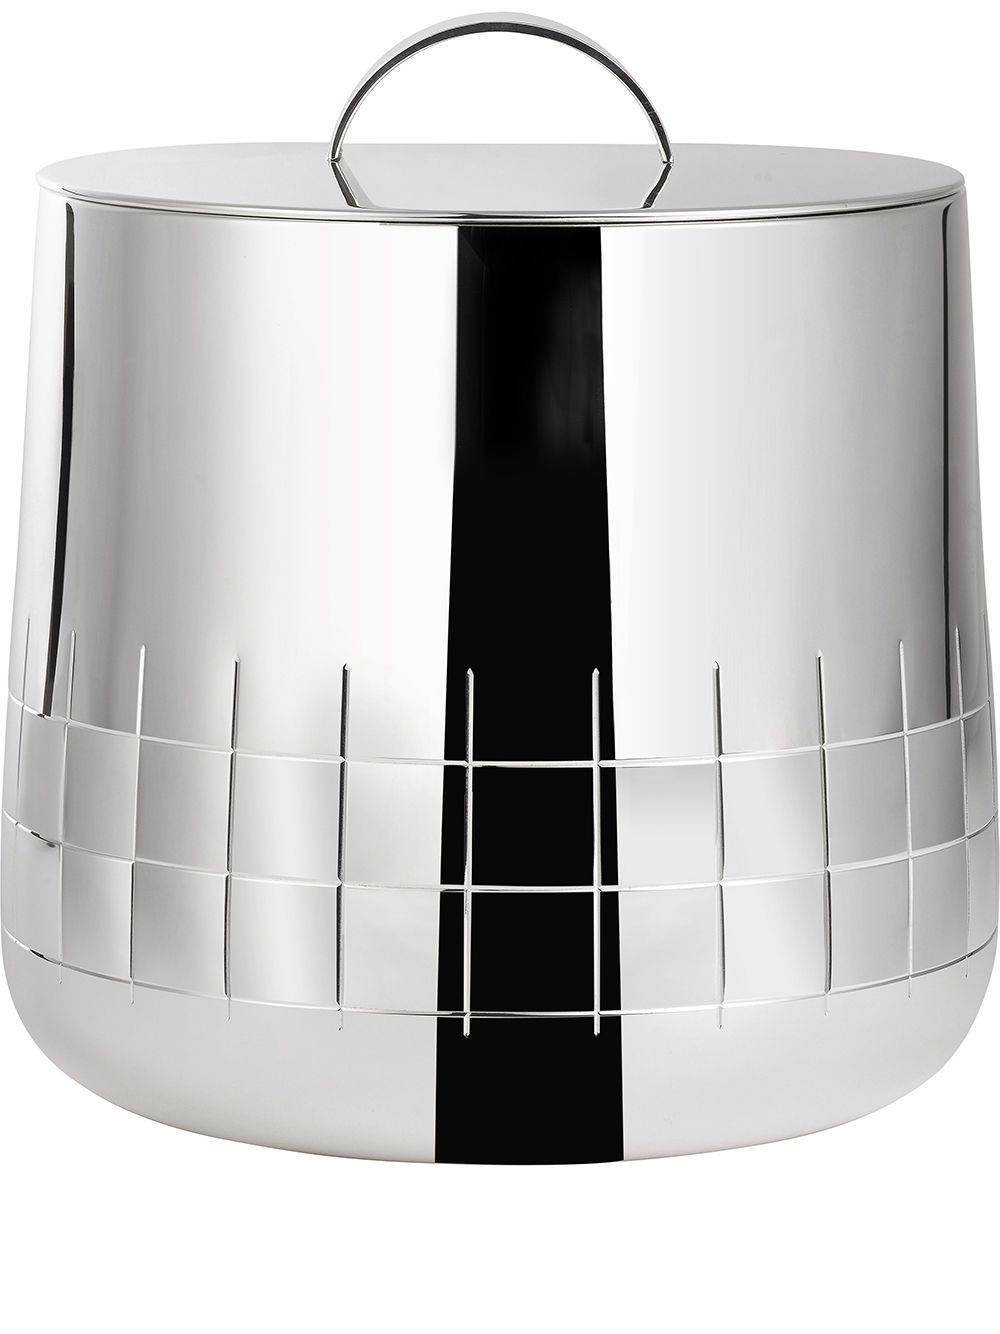 Christofle Graphik insulated silver-plated ice bucket von Christofle